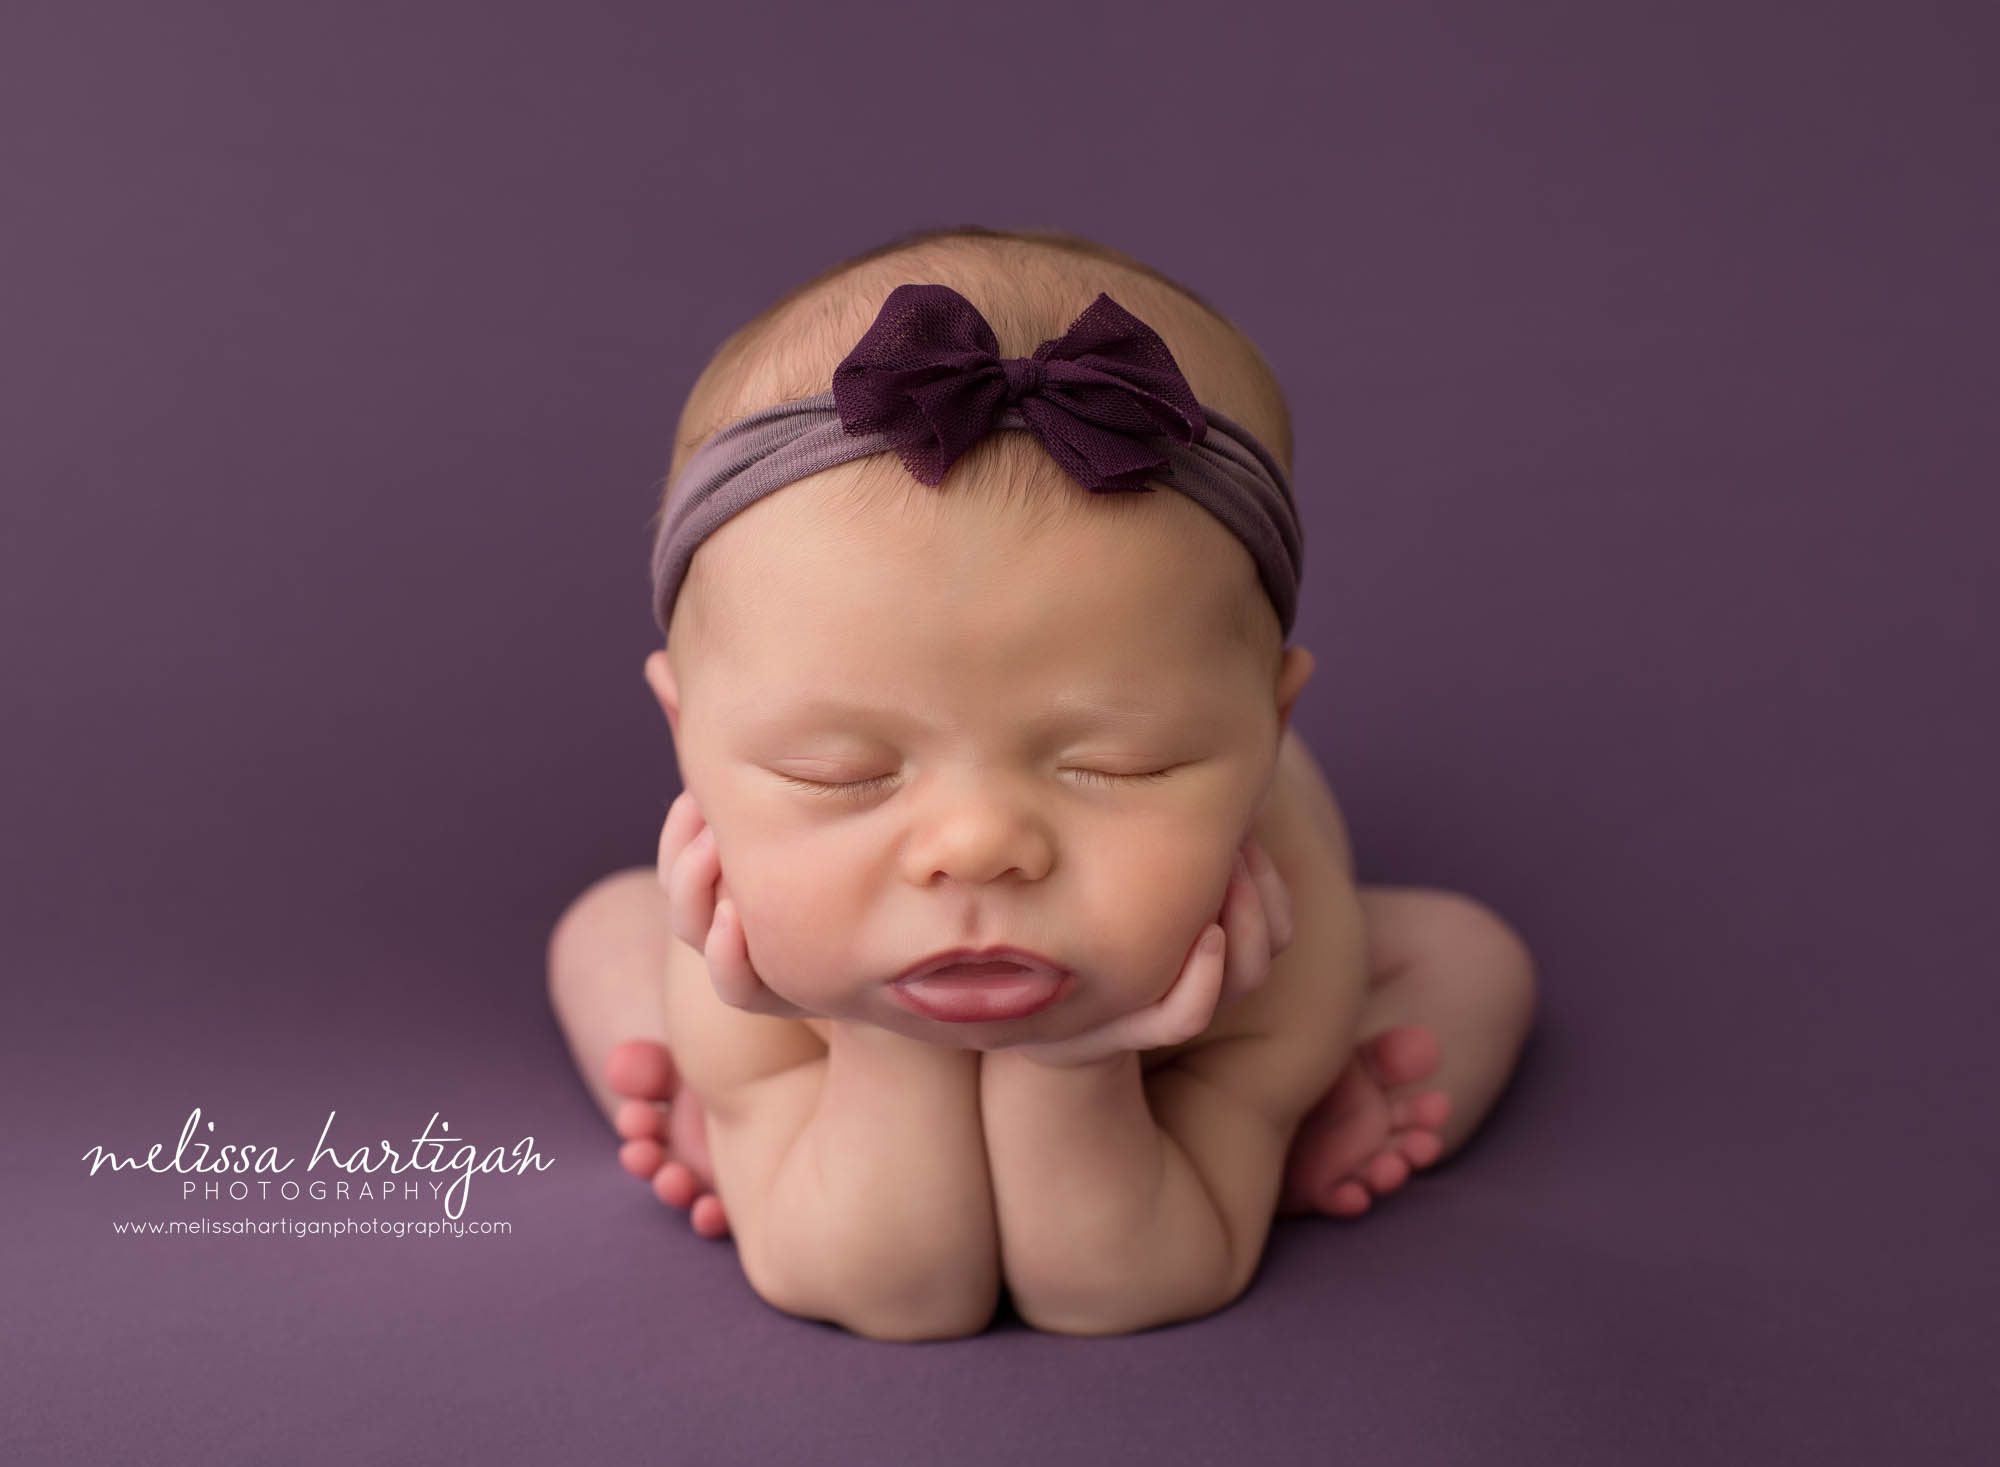 newborn baby girl posed froggy pose on purple backdrop